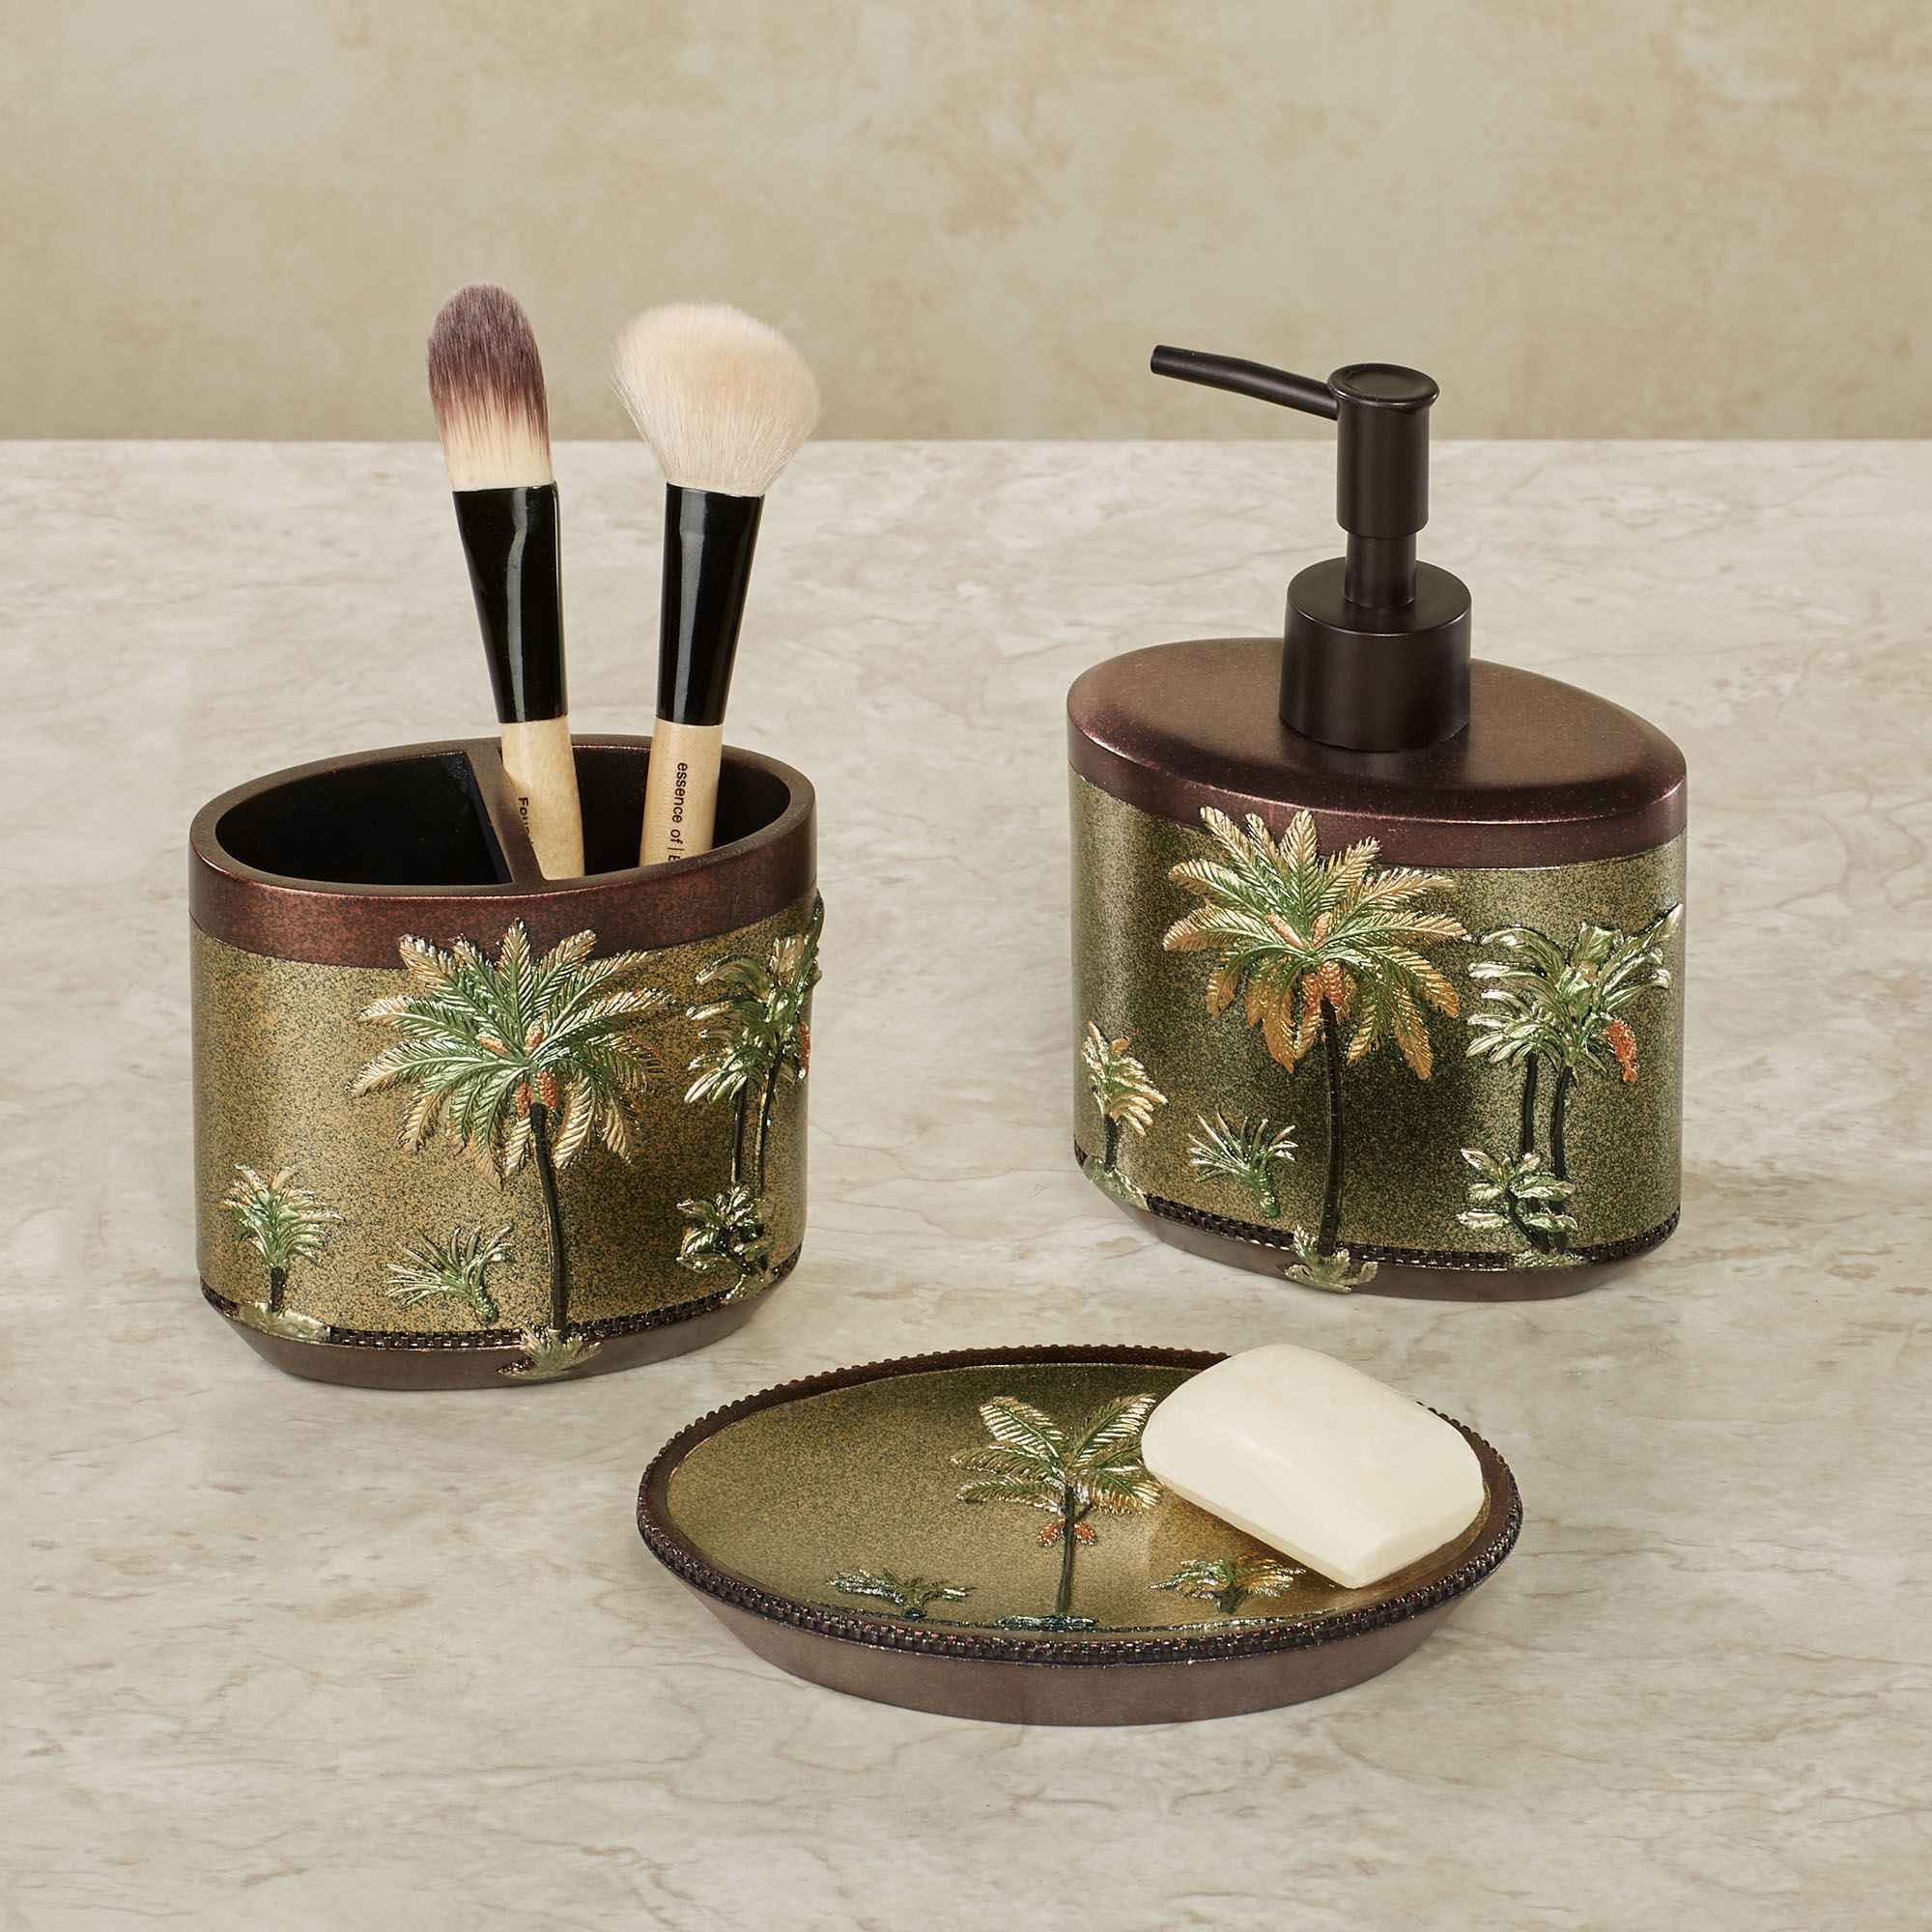 Palm Tree Bathroom Decor
 Havana Tropical Palm Tree Bath Accessories